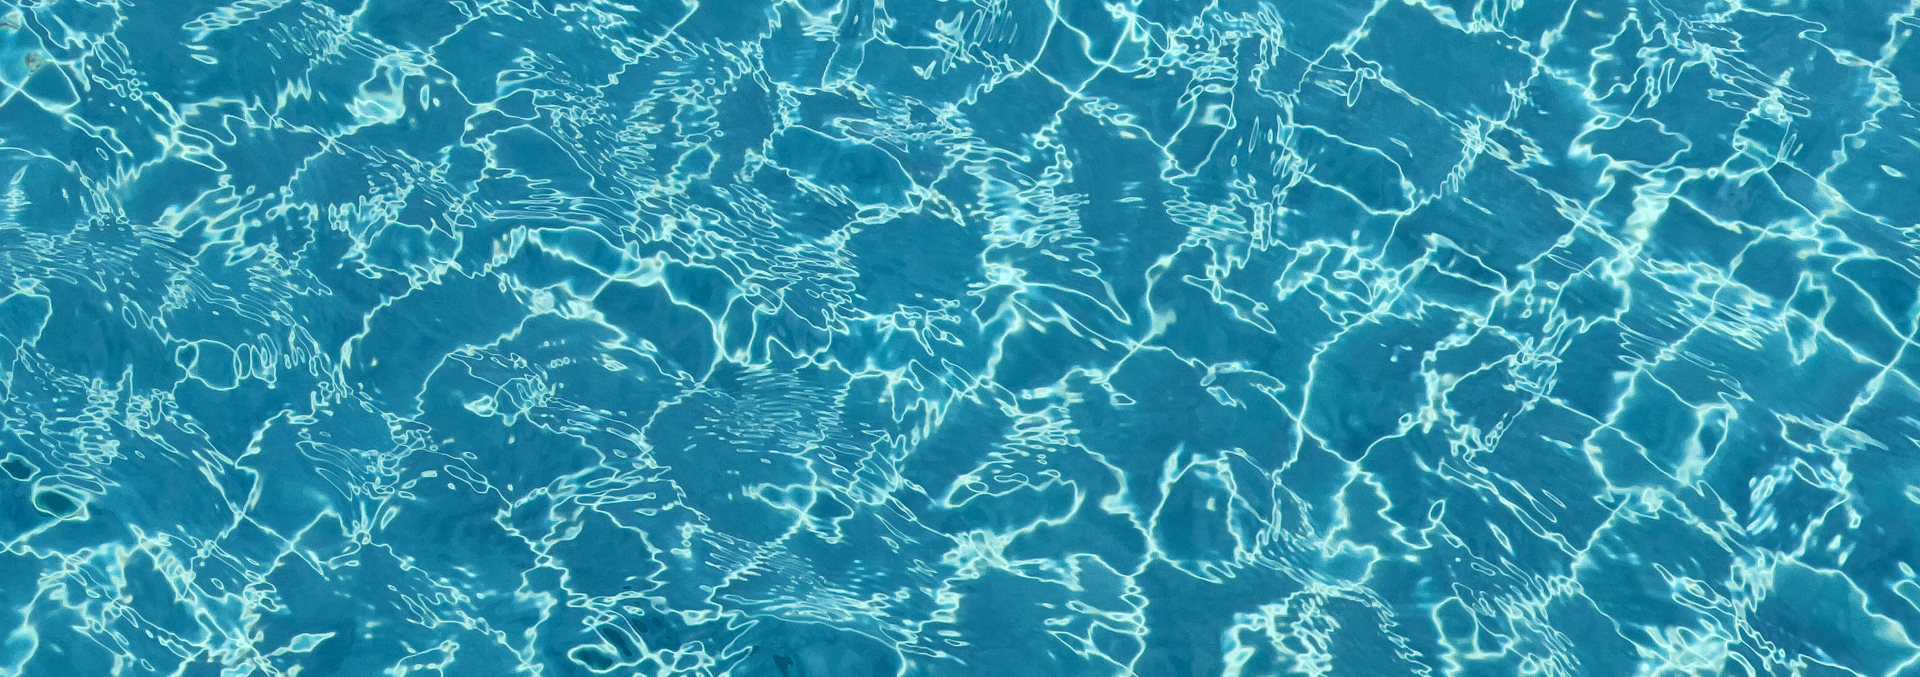 Atmospheric shot of a swimming pool